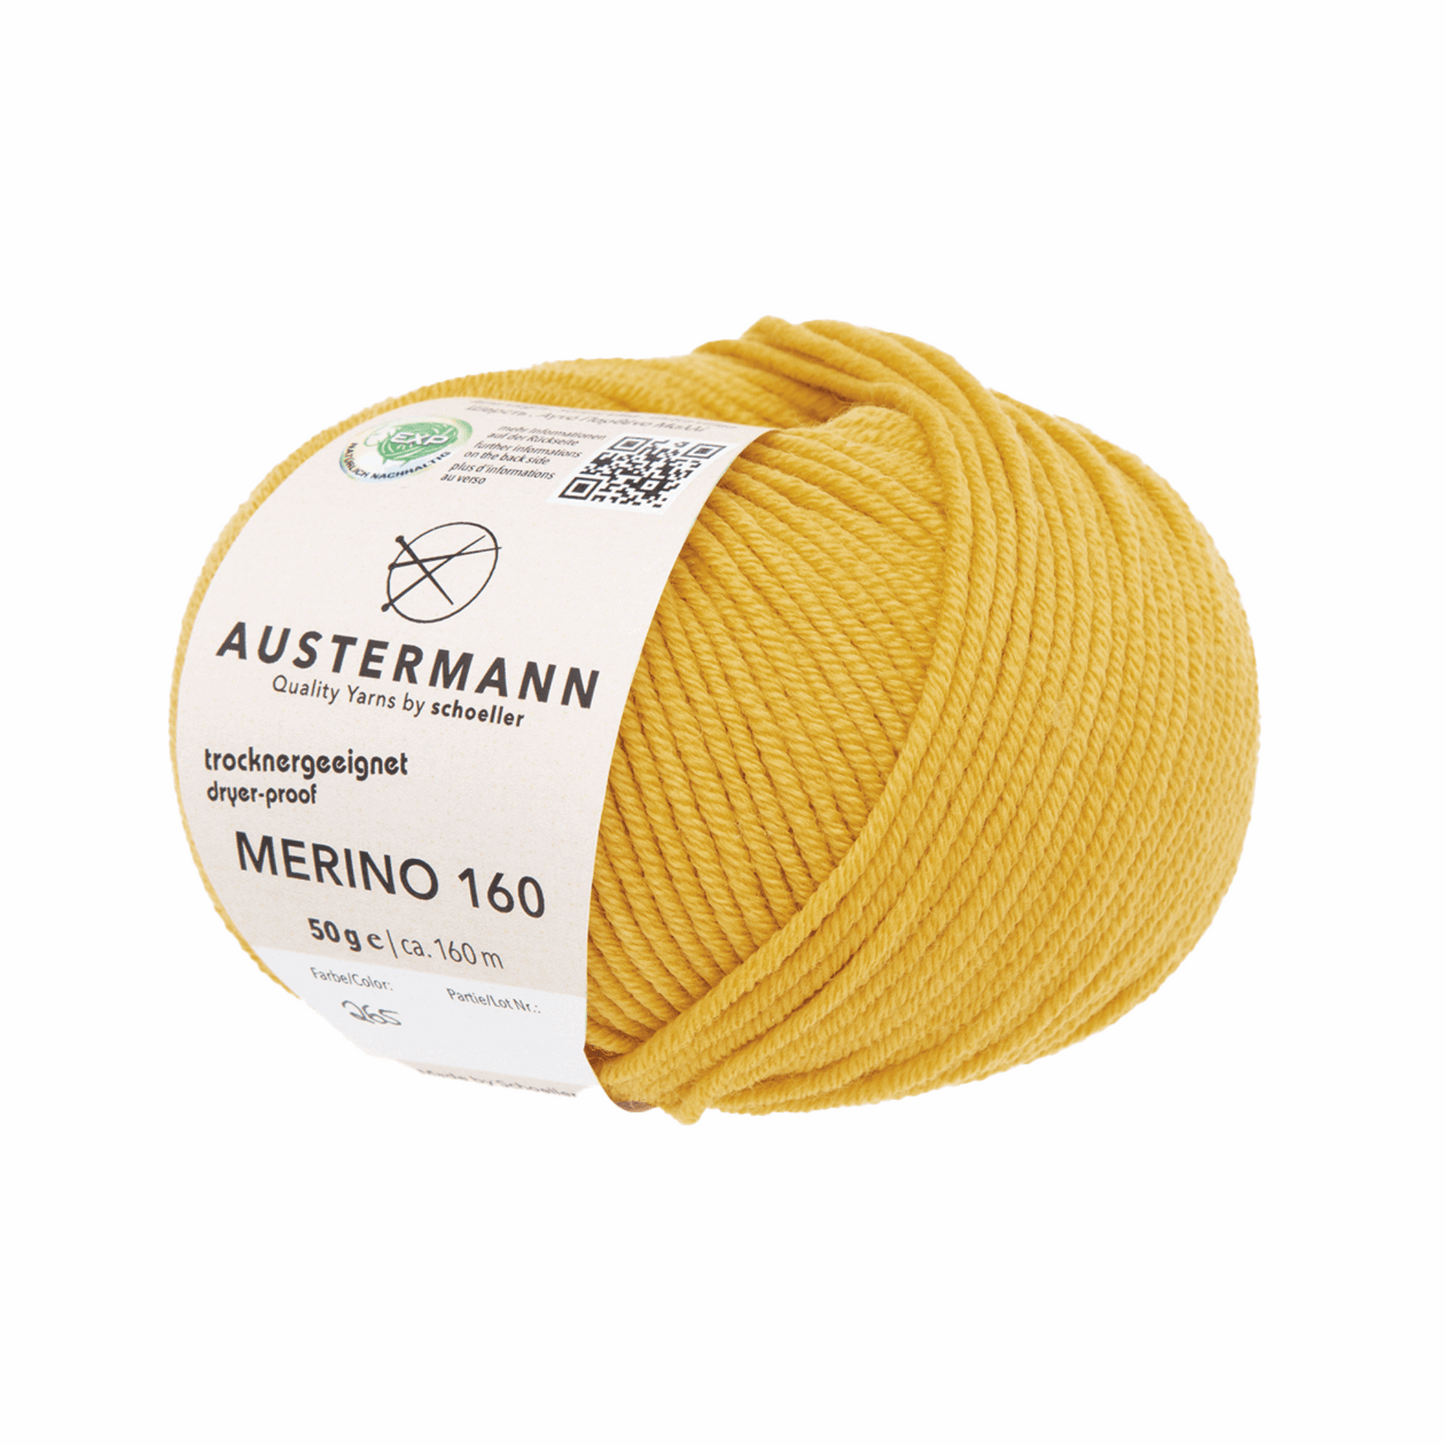 Austermann Merino 160 EXP 50g, 97610, Farbe safran 265